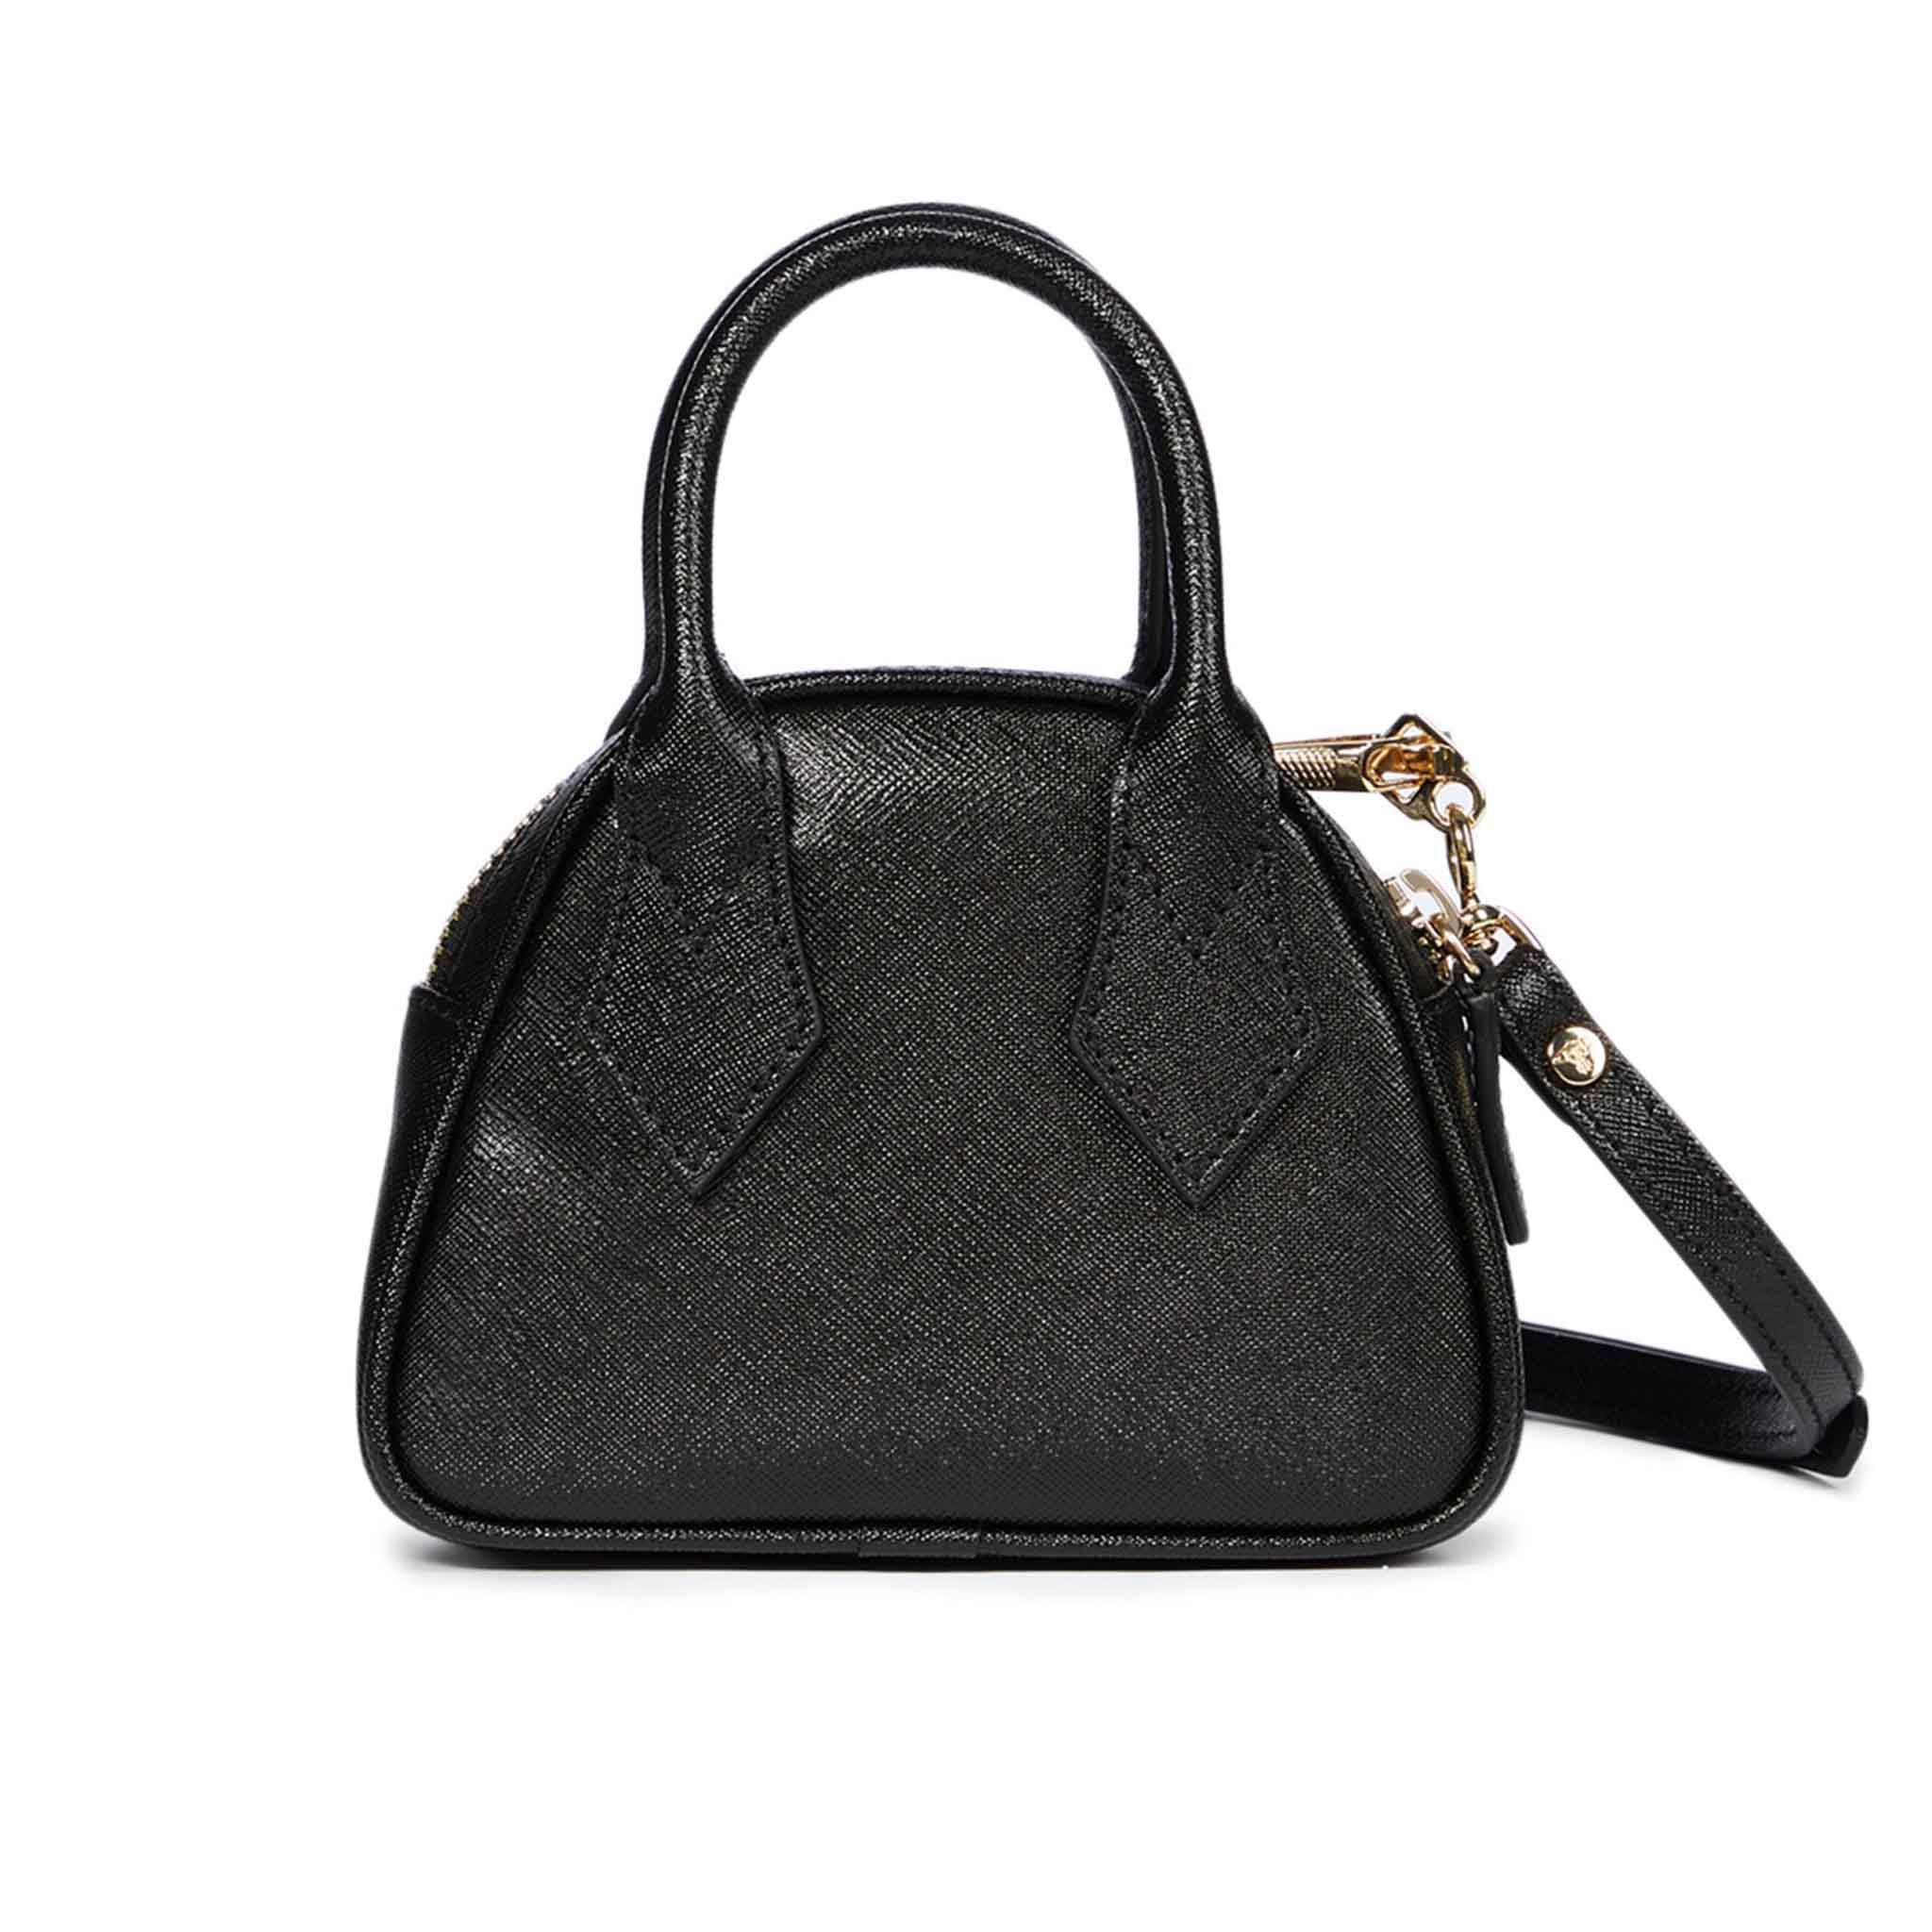 Vivienne Westwood Saffiano Mini Yasmine Bag in Black